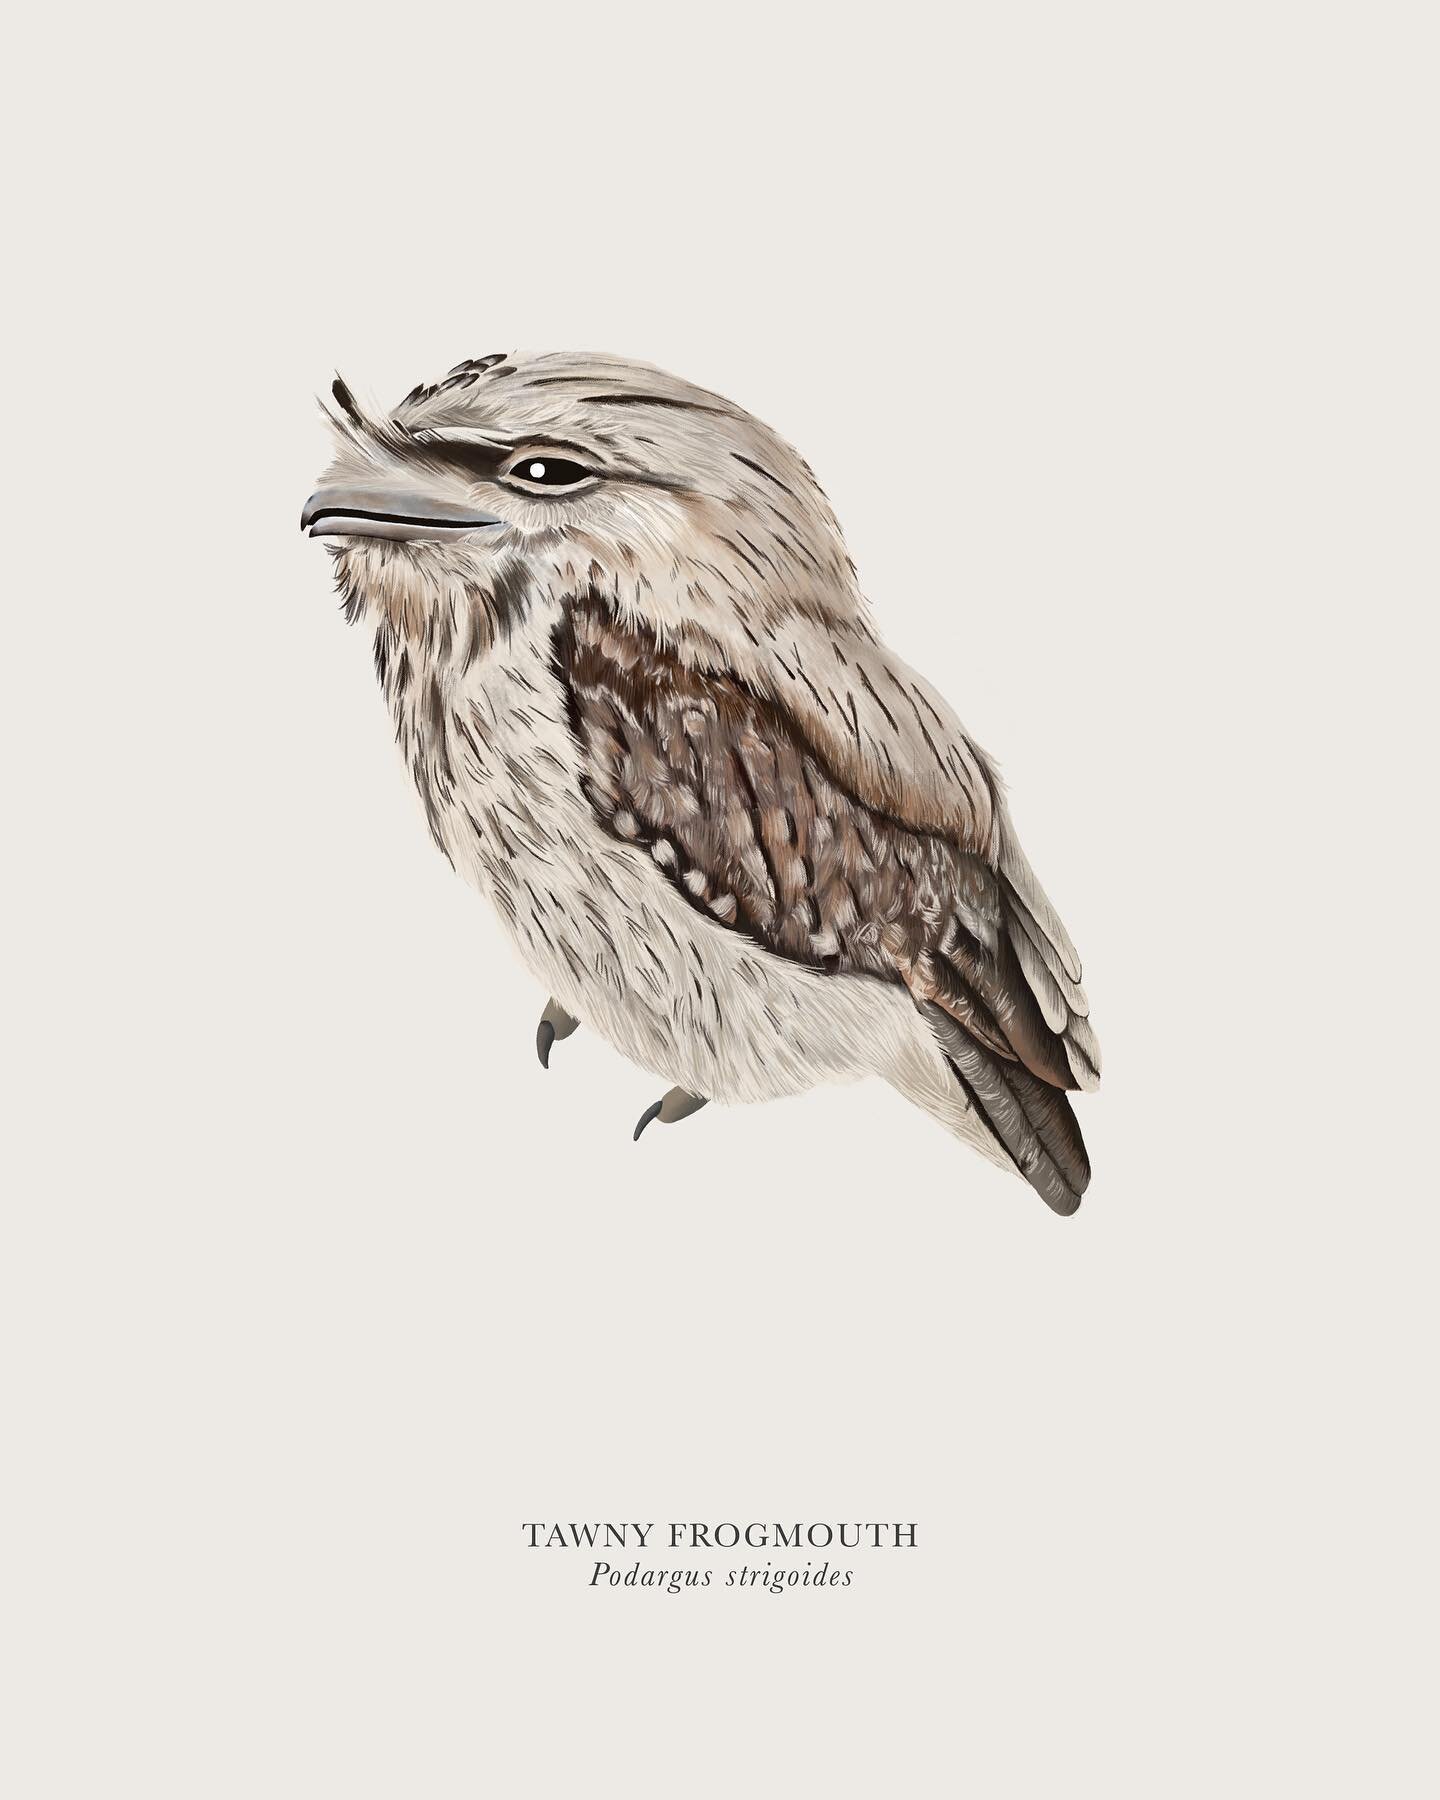 Tawny Frogmouth. Love these little guys. #illustration #procreate #tawnyfrogmouth #tasmania